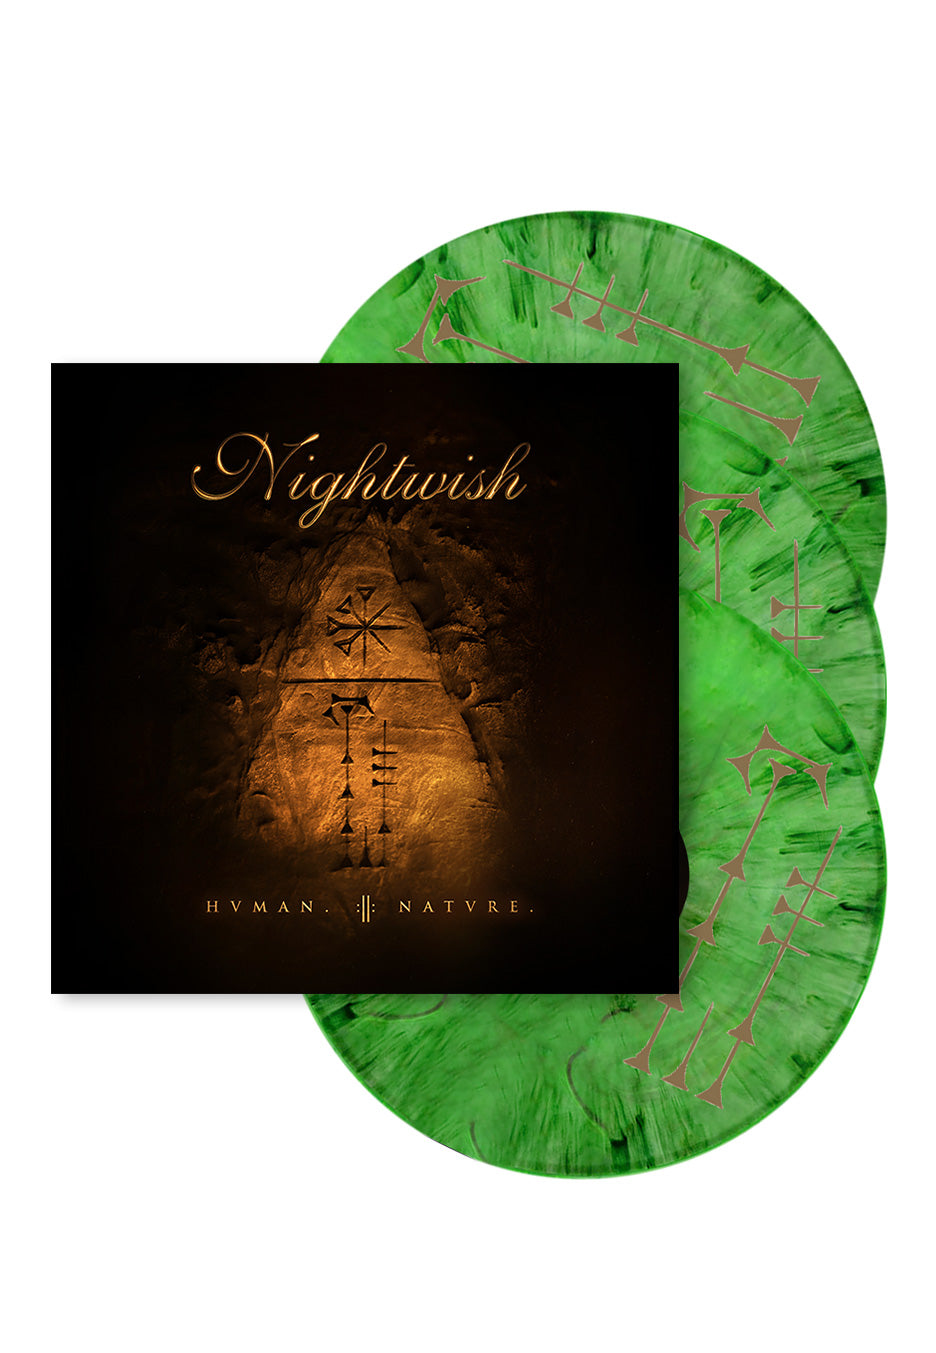 Nightwish - Human. :Ii: Nature. Ltd. Eco - Marbled 3 Vinyl